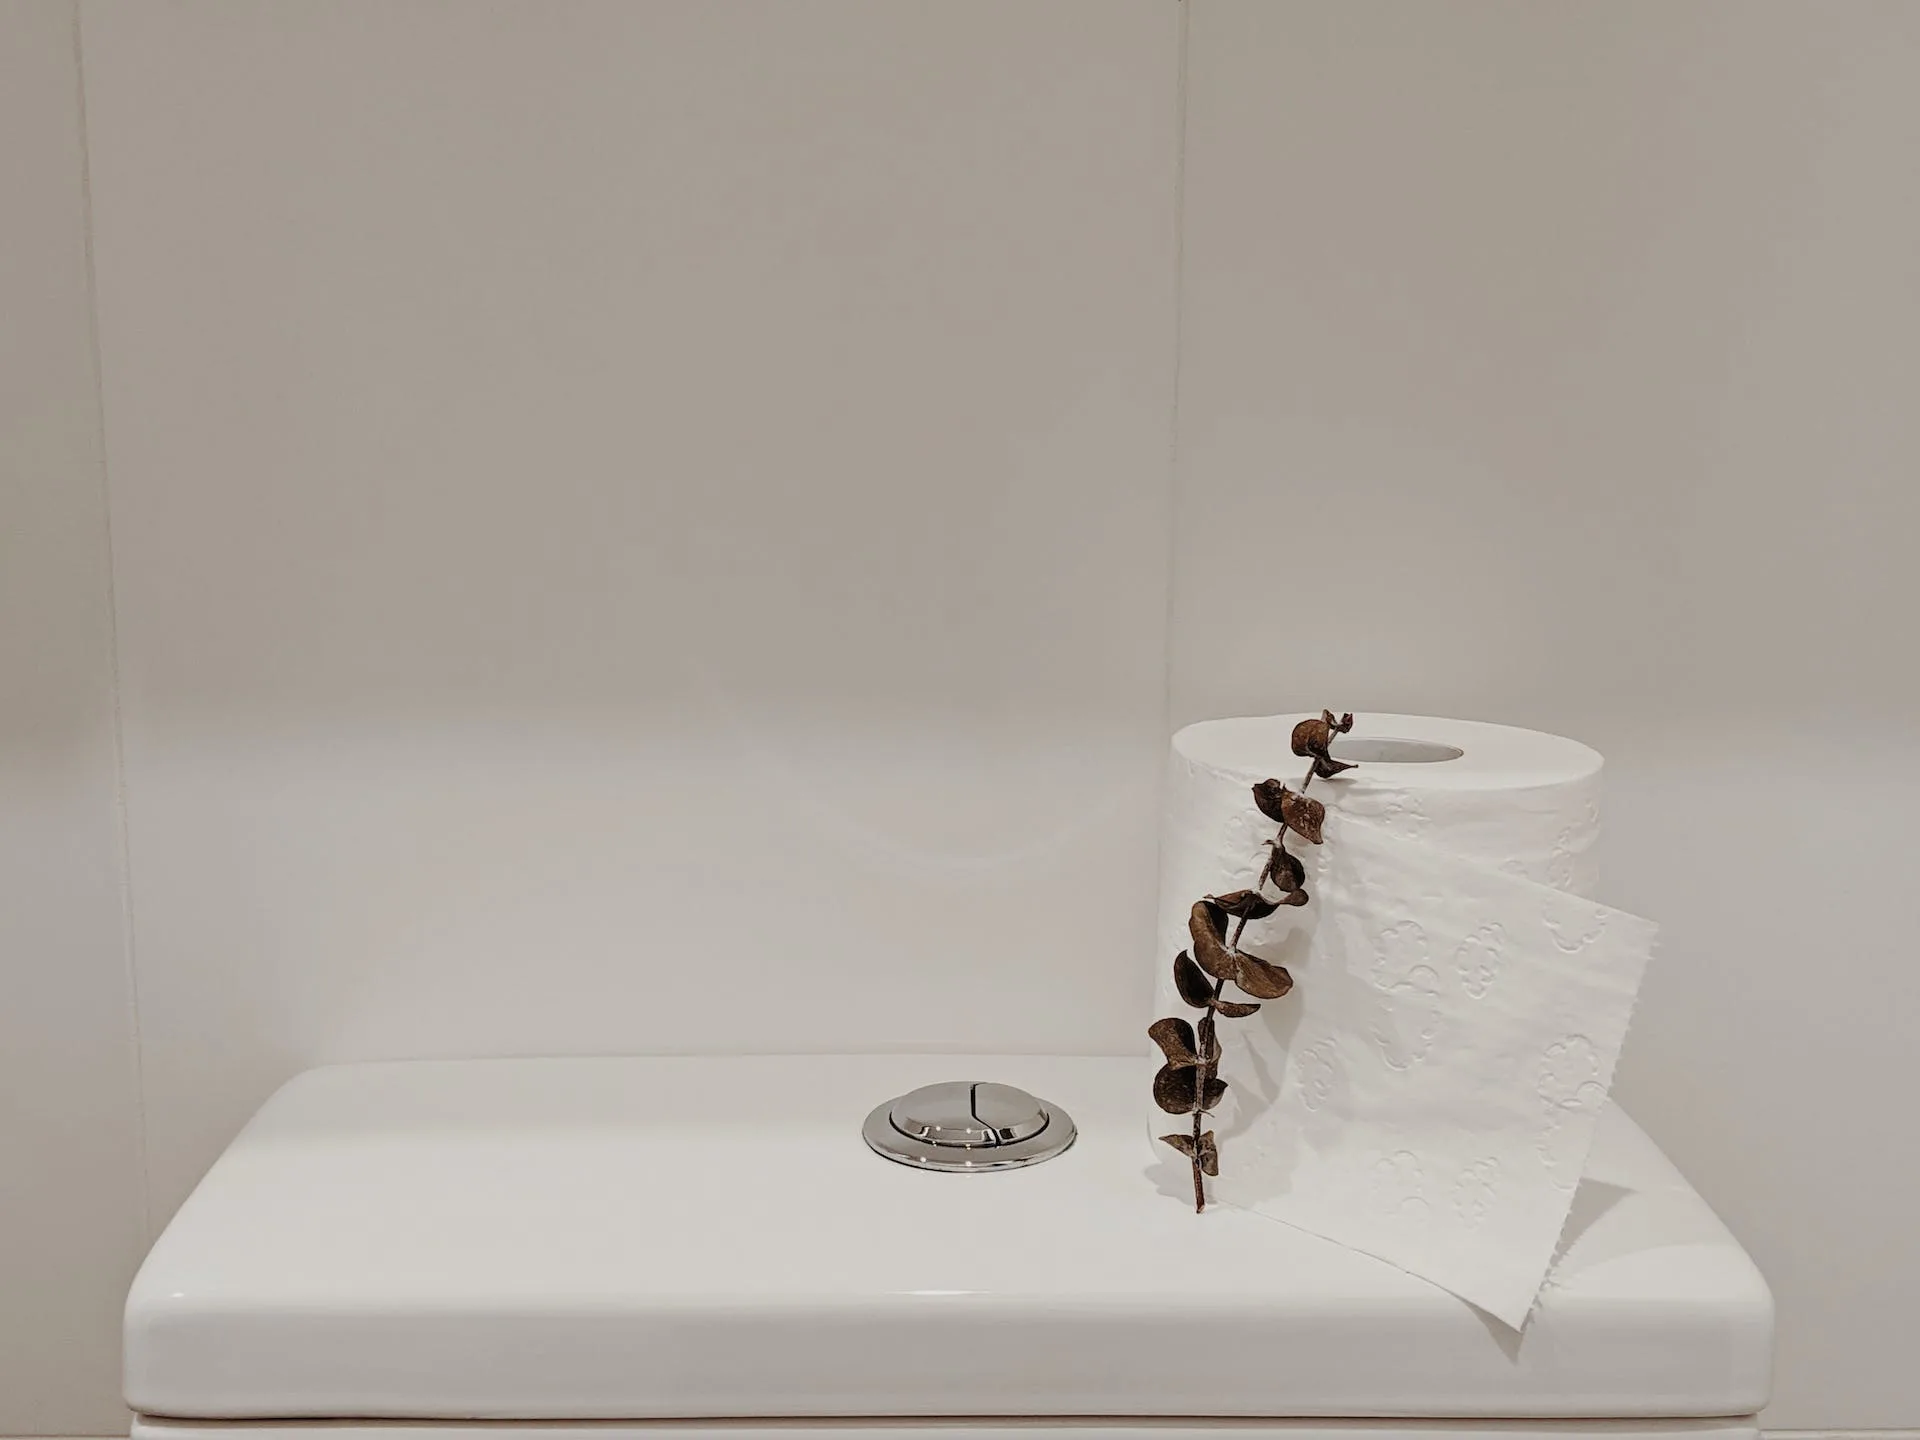 Toilet Paper Roll on White Ceramic Toilet Tank